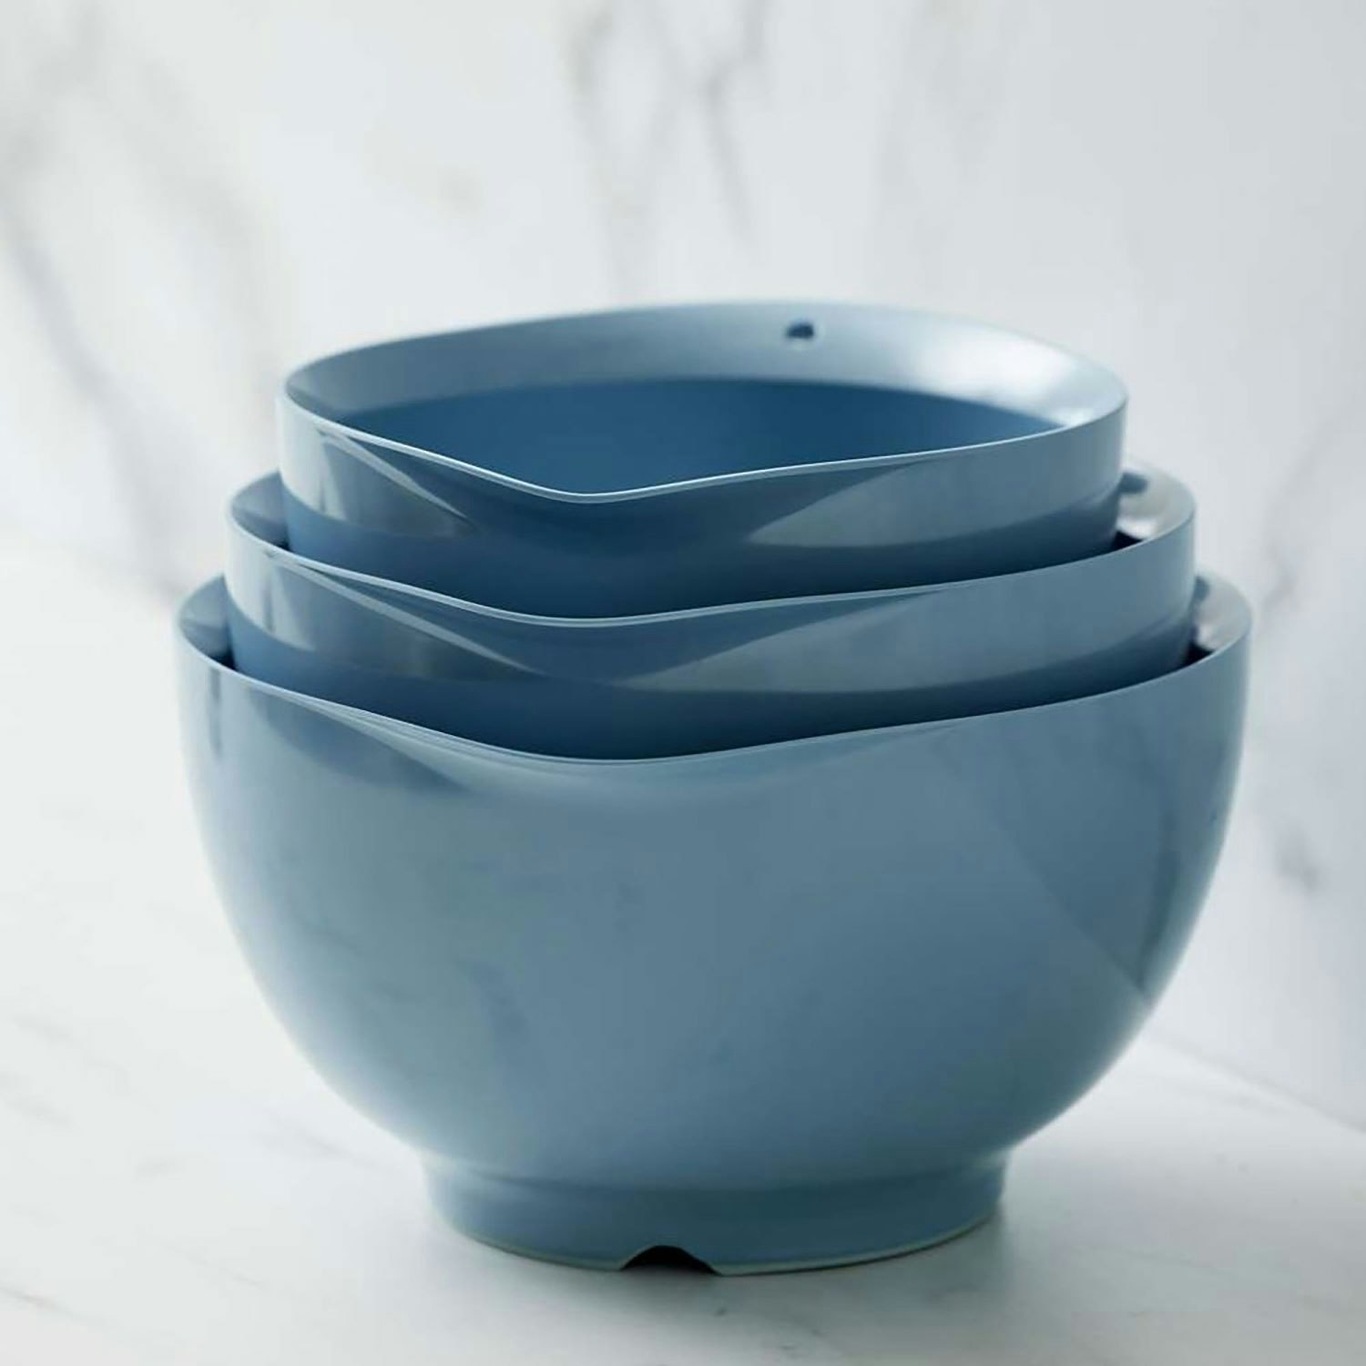 https://royaldesign.com/image/2/rosti-bowl-victoria-2-liters-dusty-blue-2?w=800&quality=80